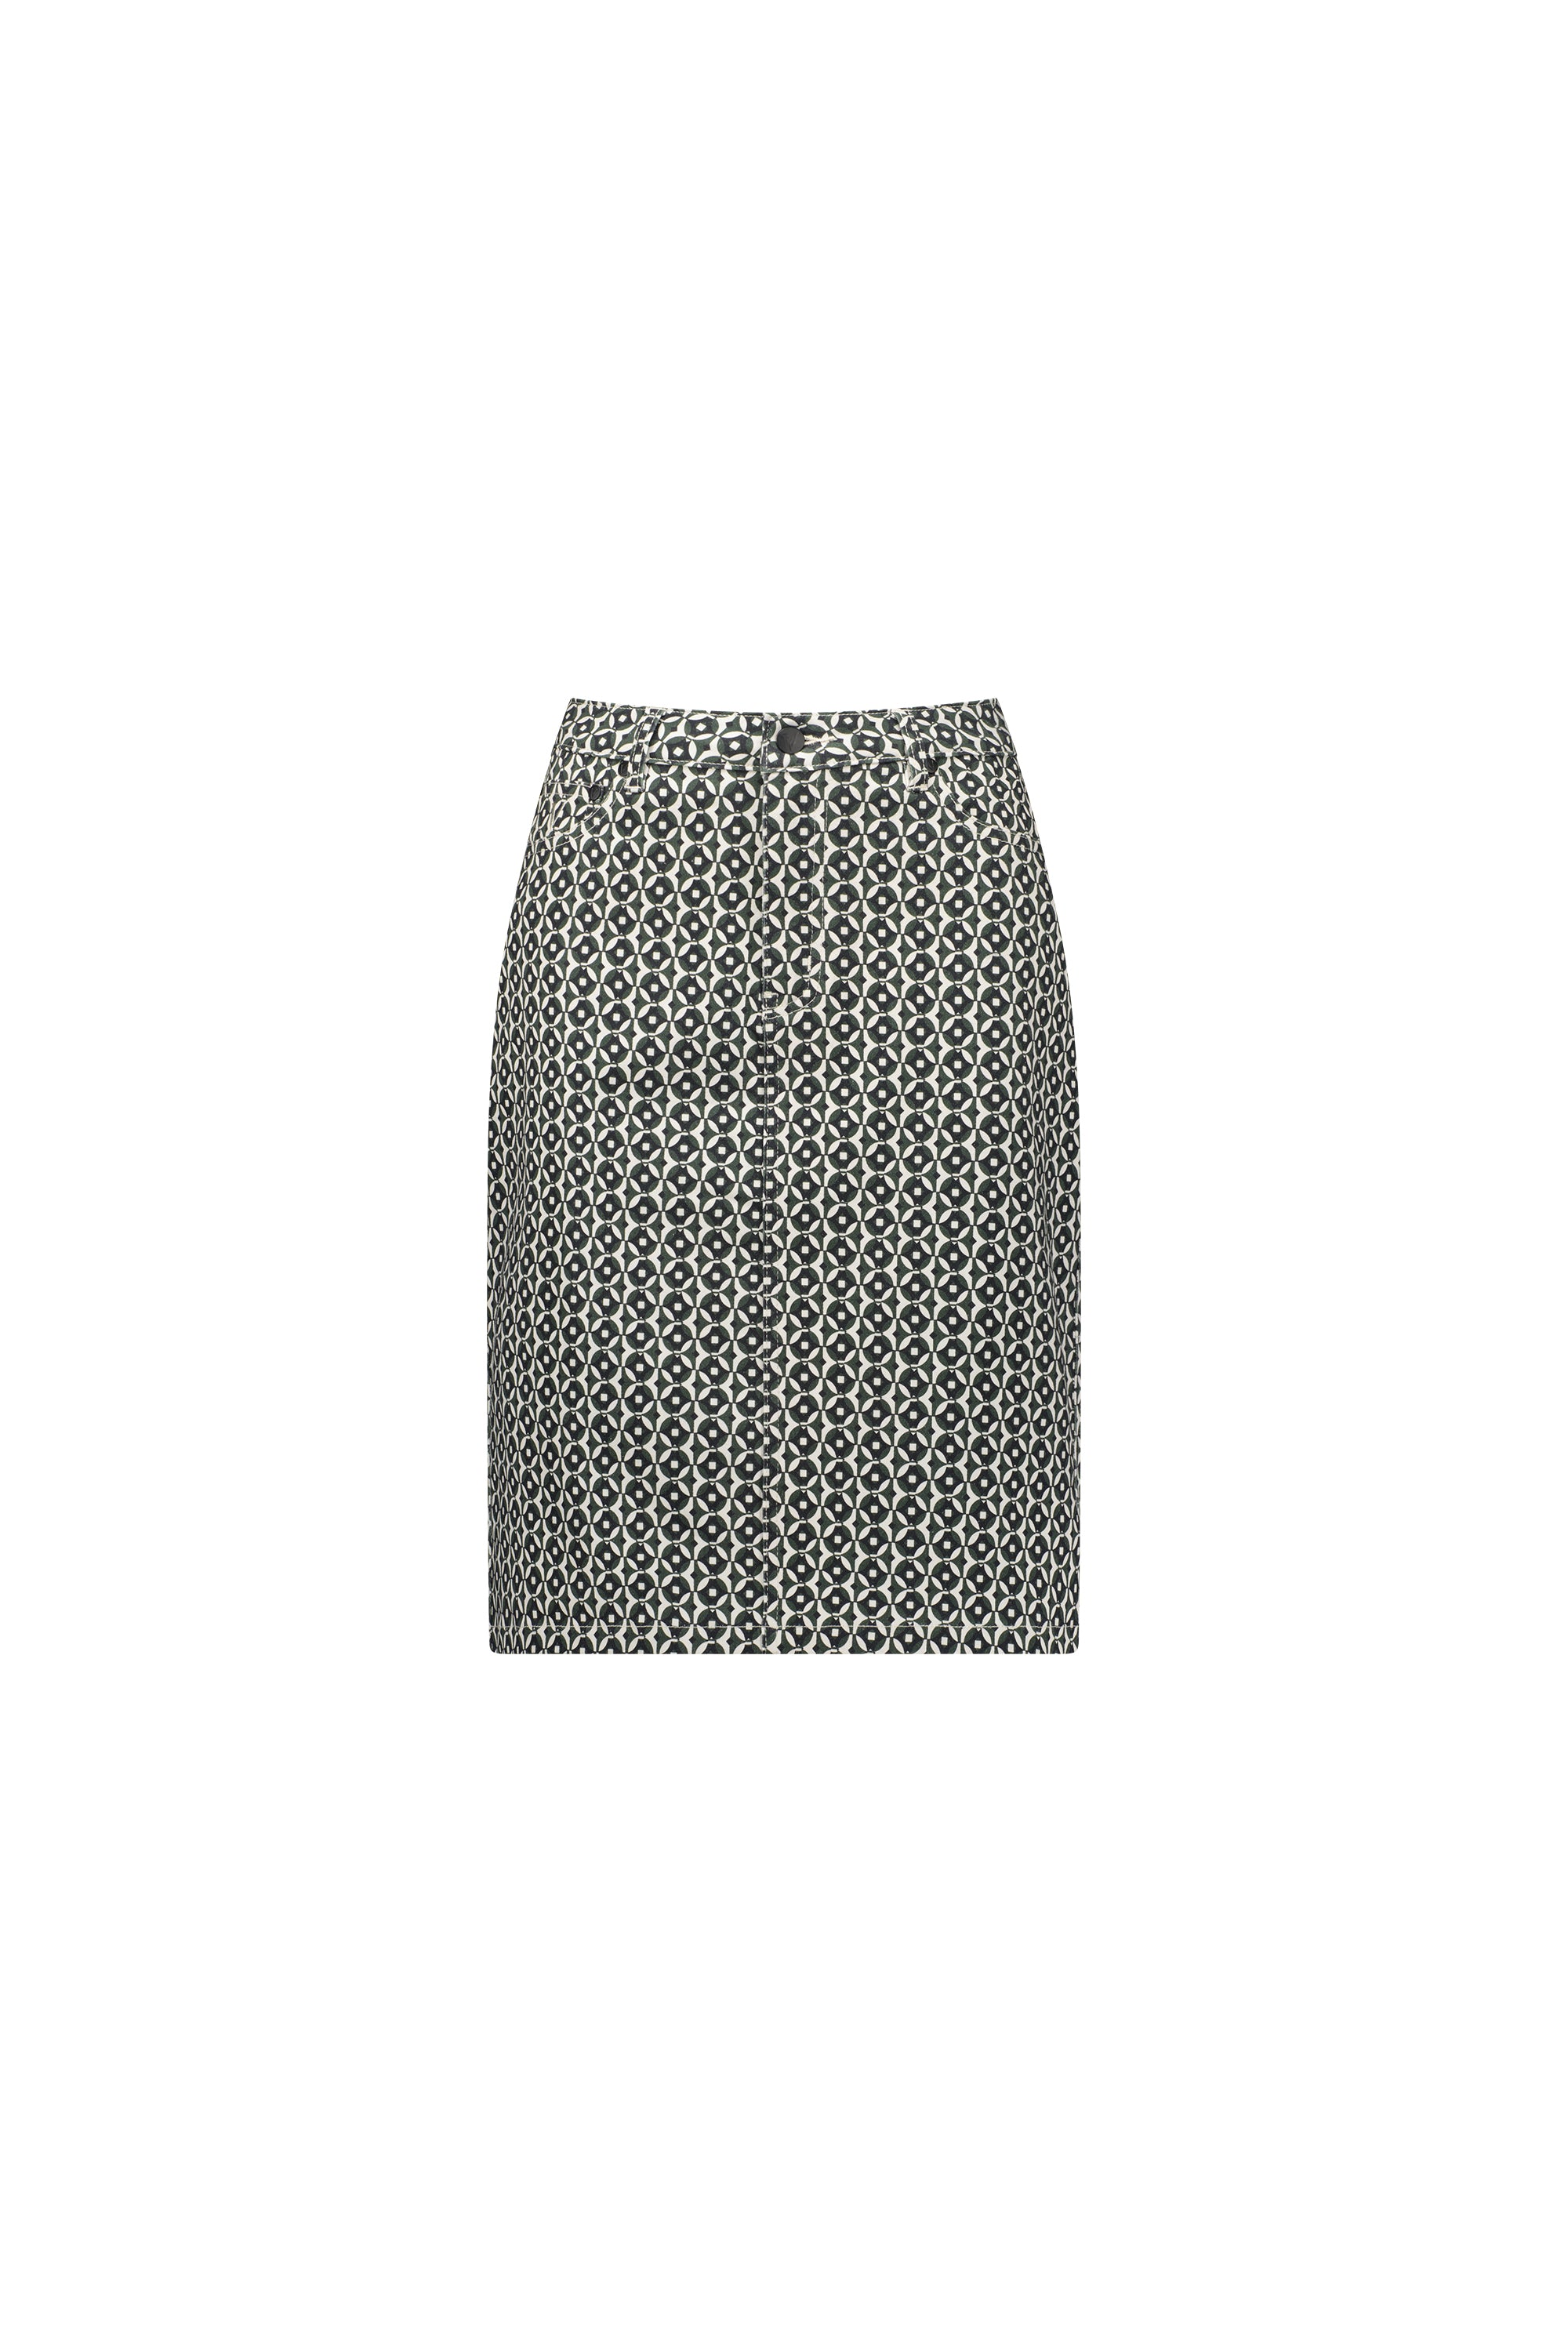 Vassalli Knee Length Printed Skirt - Vault